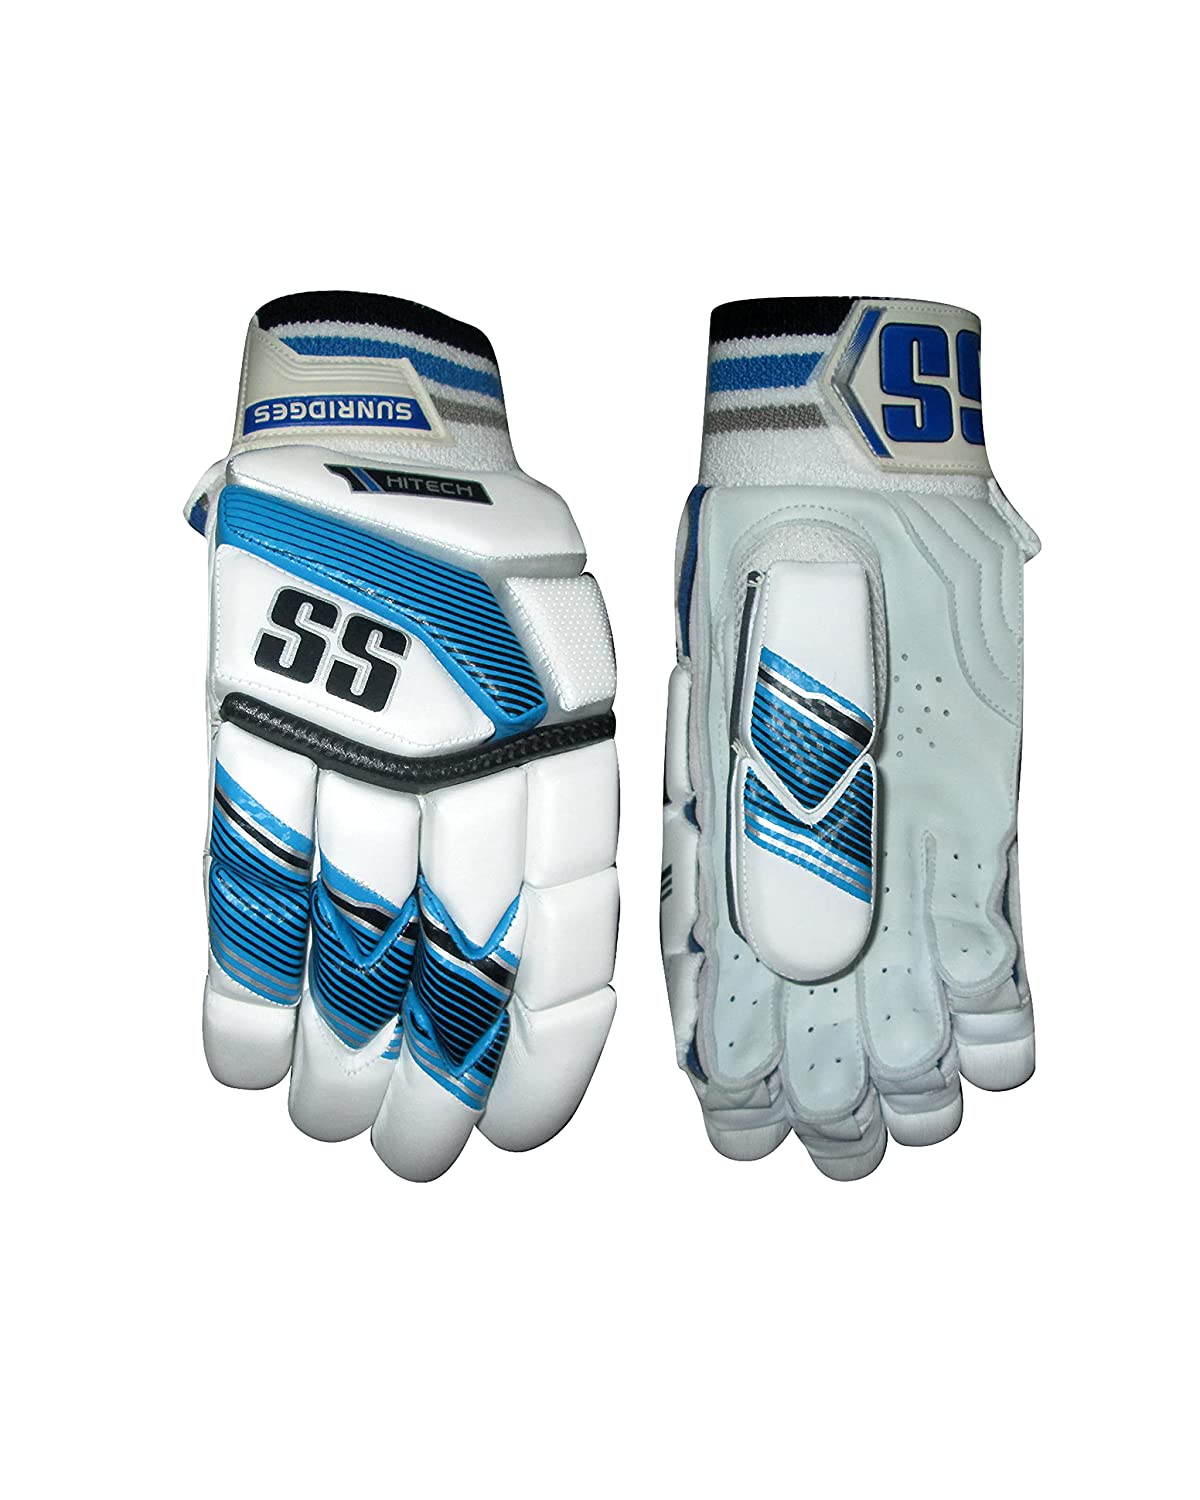 SS HITECH Cricket Batting Gloves - Best Price online Prokicksports.com